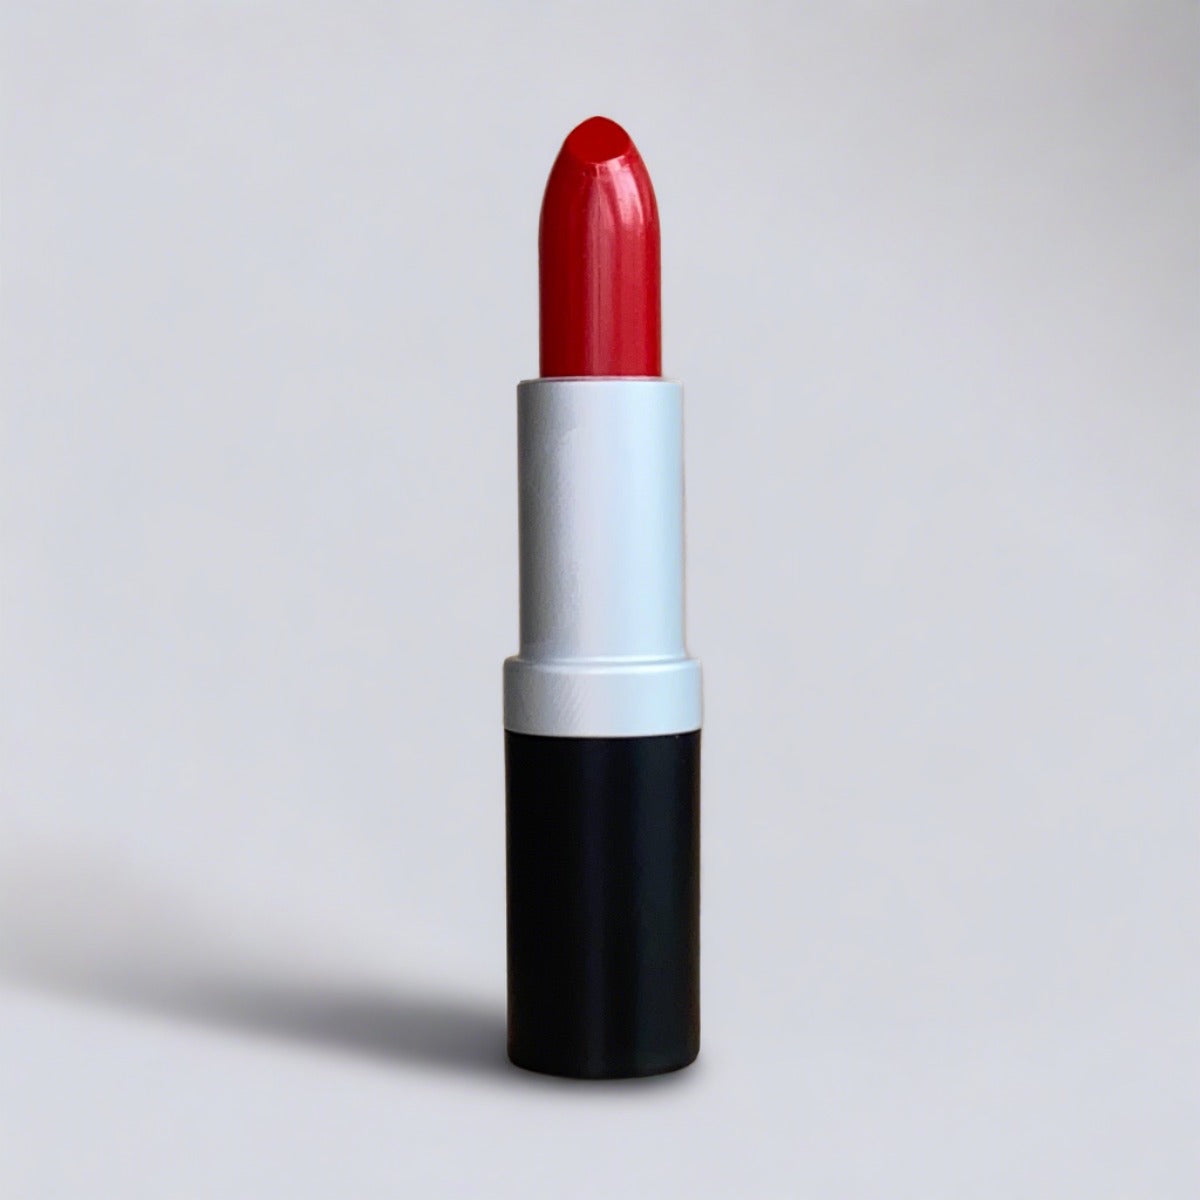 Classic, timeless bright highly-moisturizing lipstick